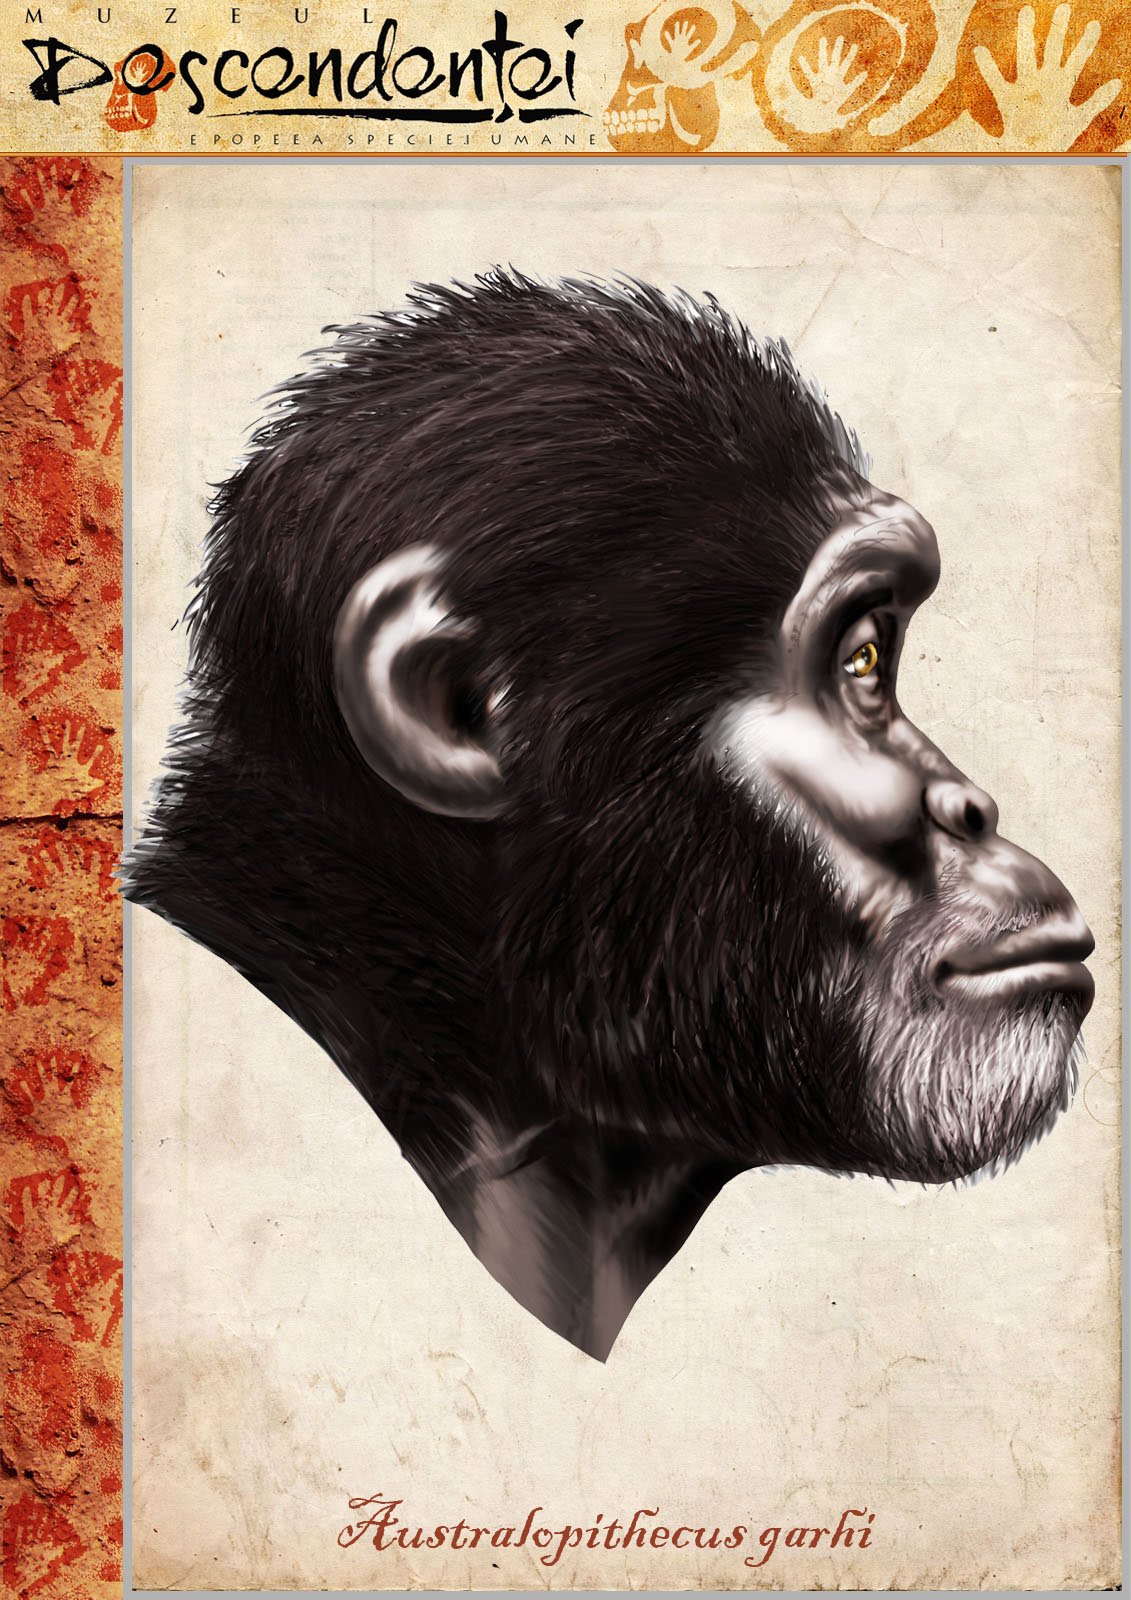 Australopithecus garh afarensis anamensis evolution  human  homo  neanderthal  erectus ergaster habilis heidelbergensis paranthropus boisei ardipithecus sahelanthropus